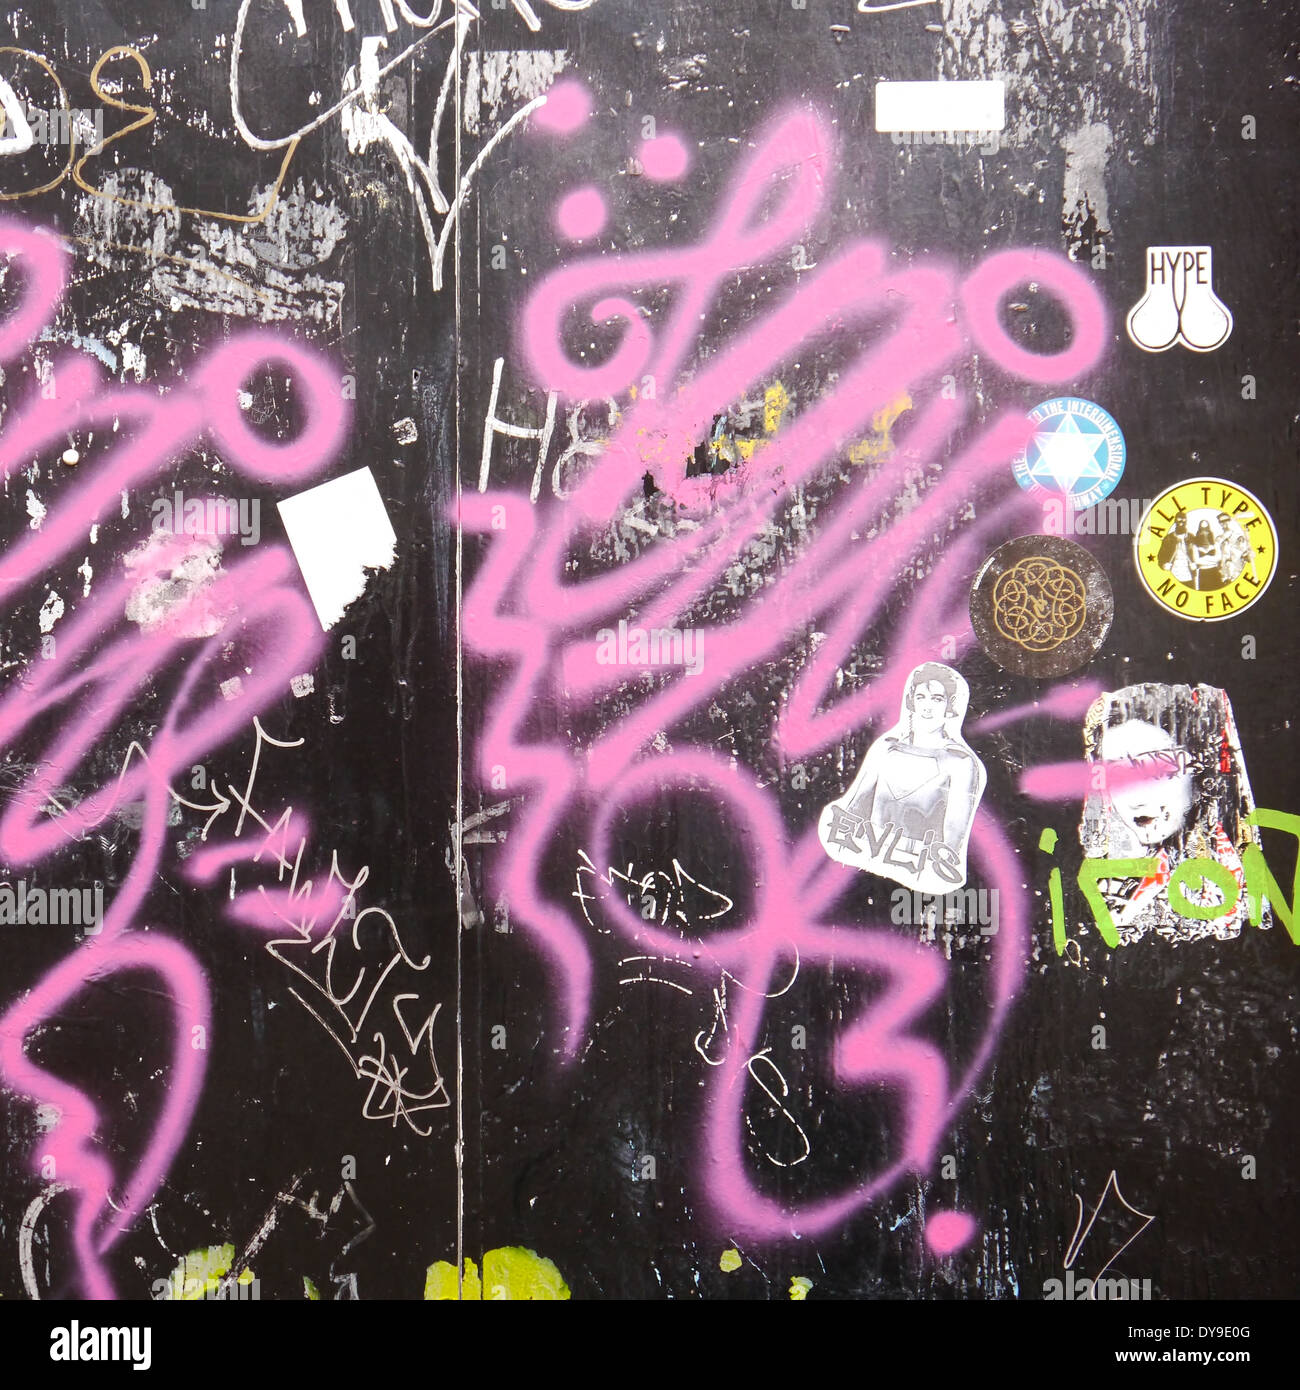 Spray painted graffito / graffiti in urban setting Stock Photo